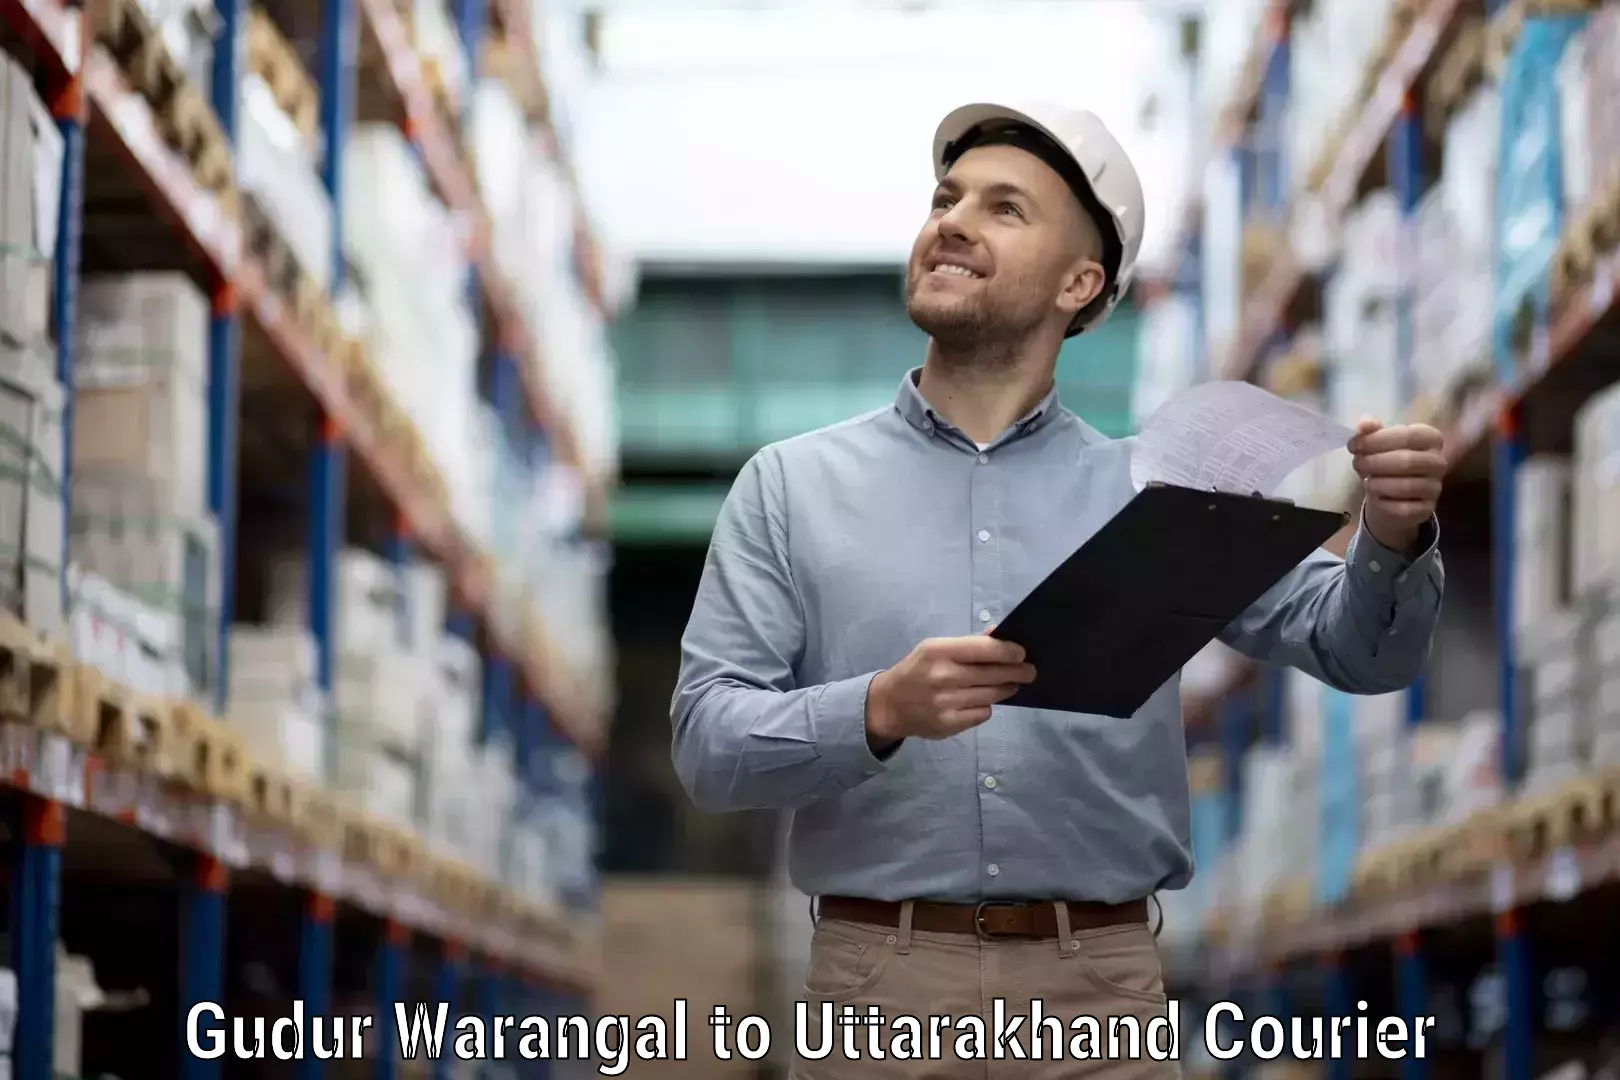 Pharmaceutical courier Gudur Warangal to Champawat